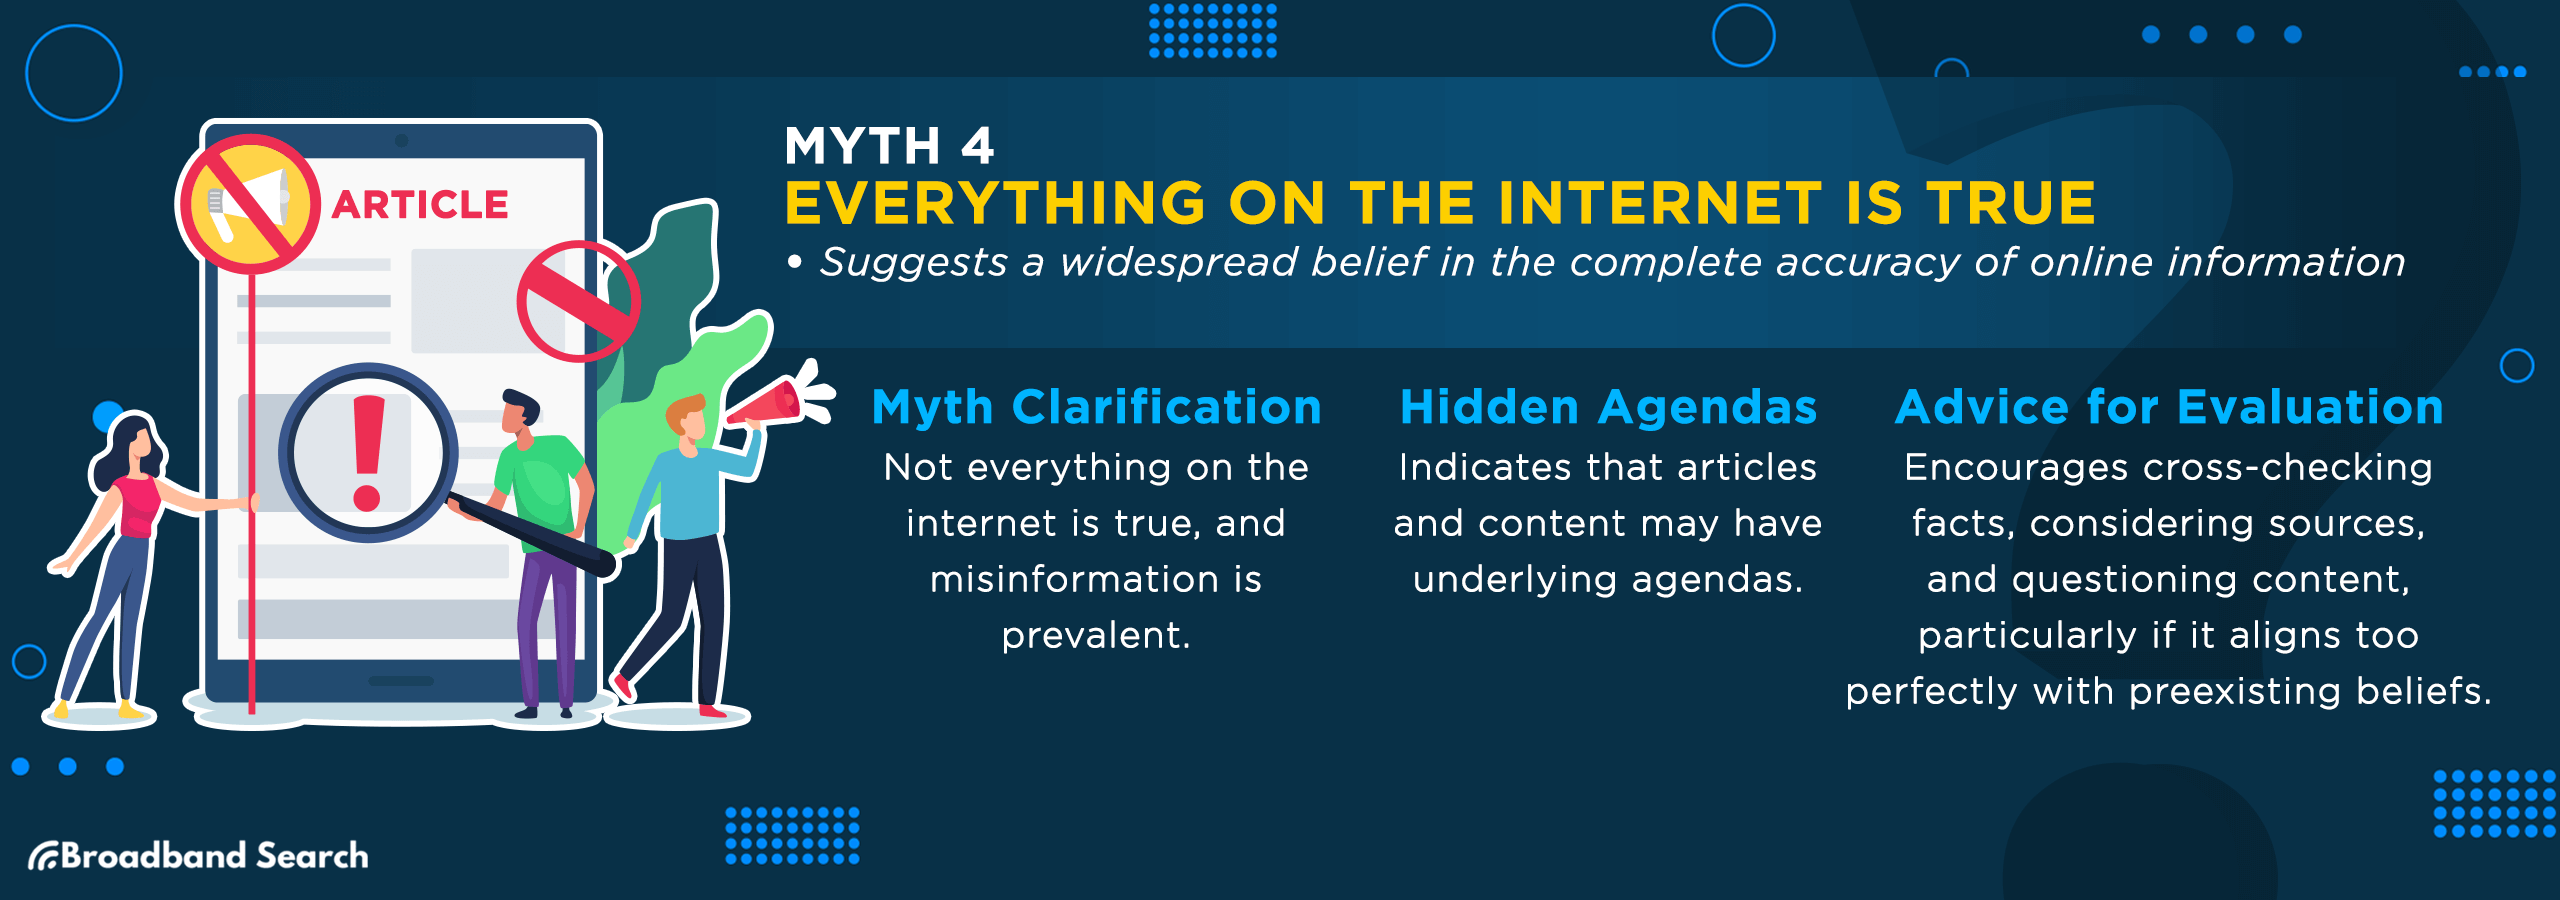 fourth internet myth, everything on the internet is true